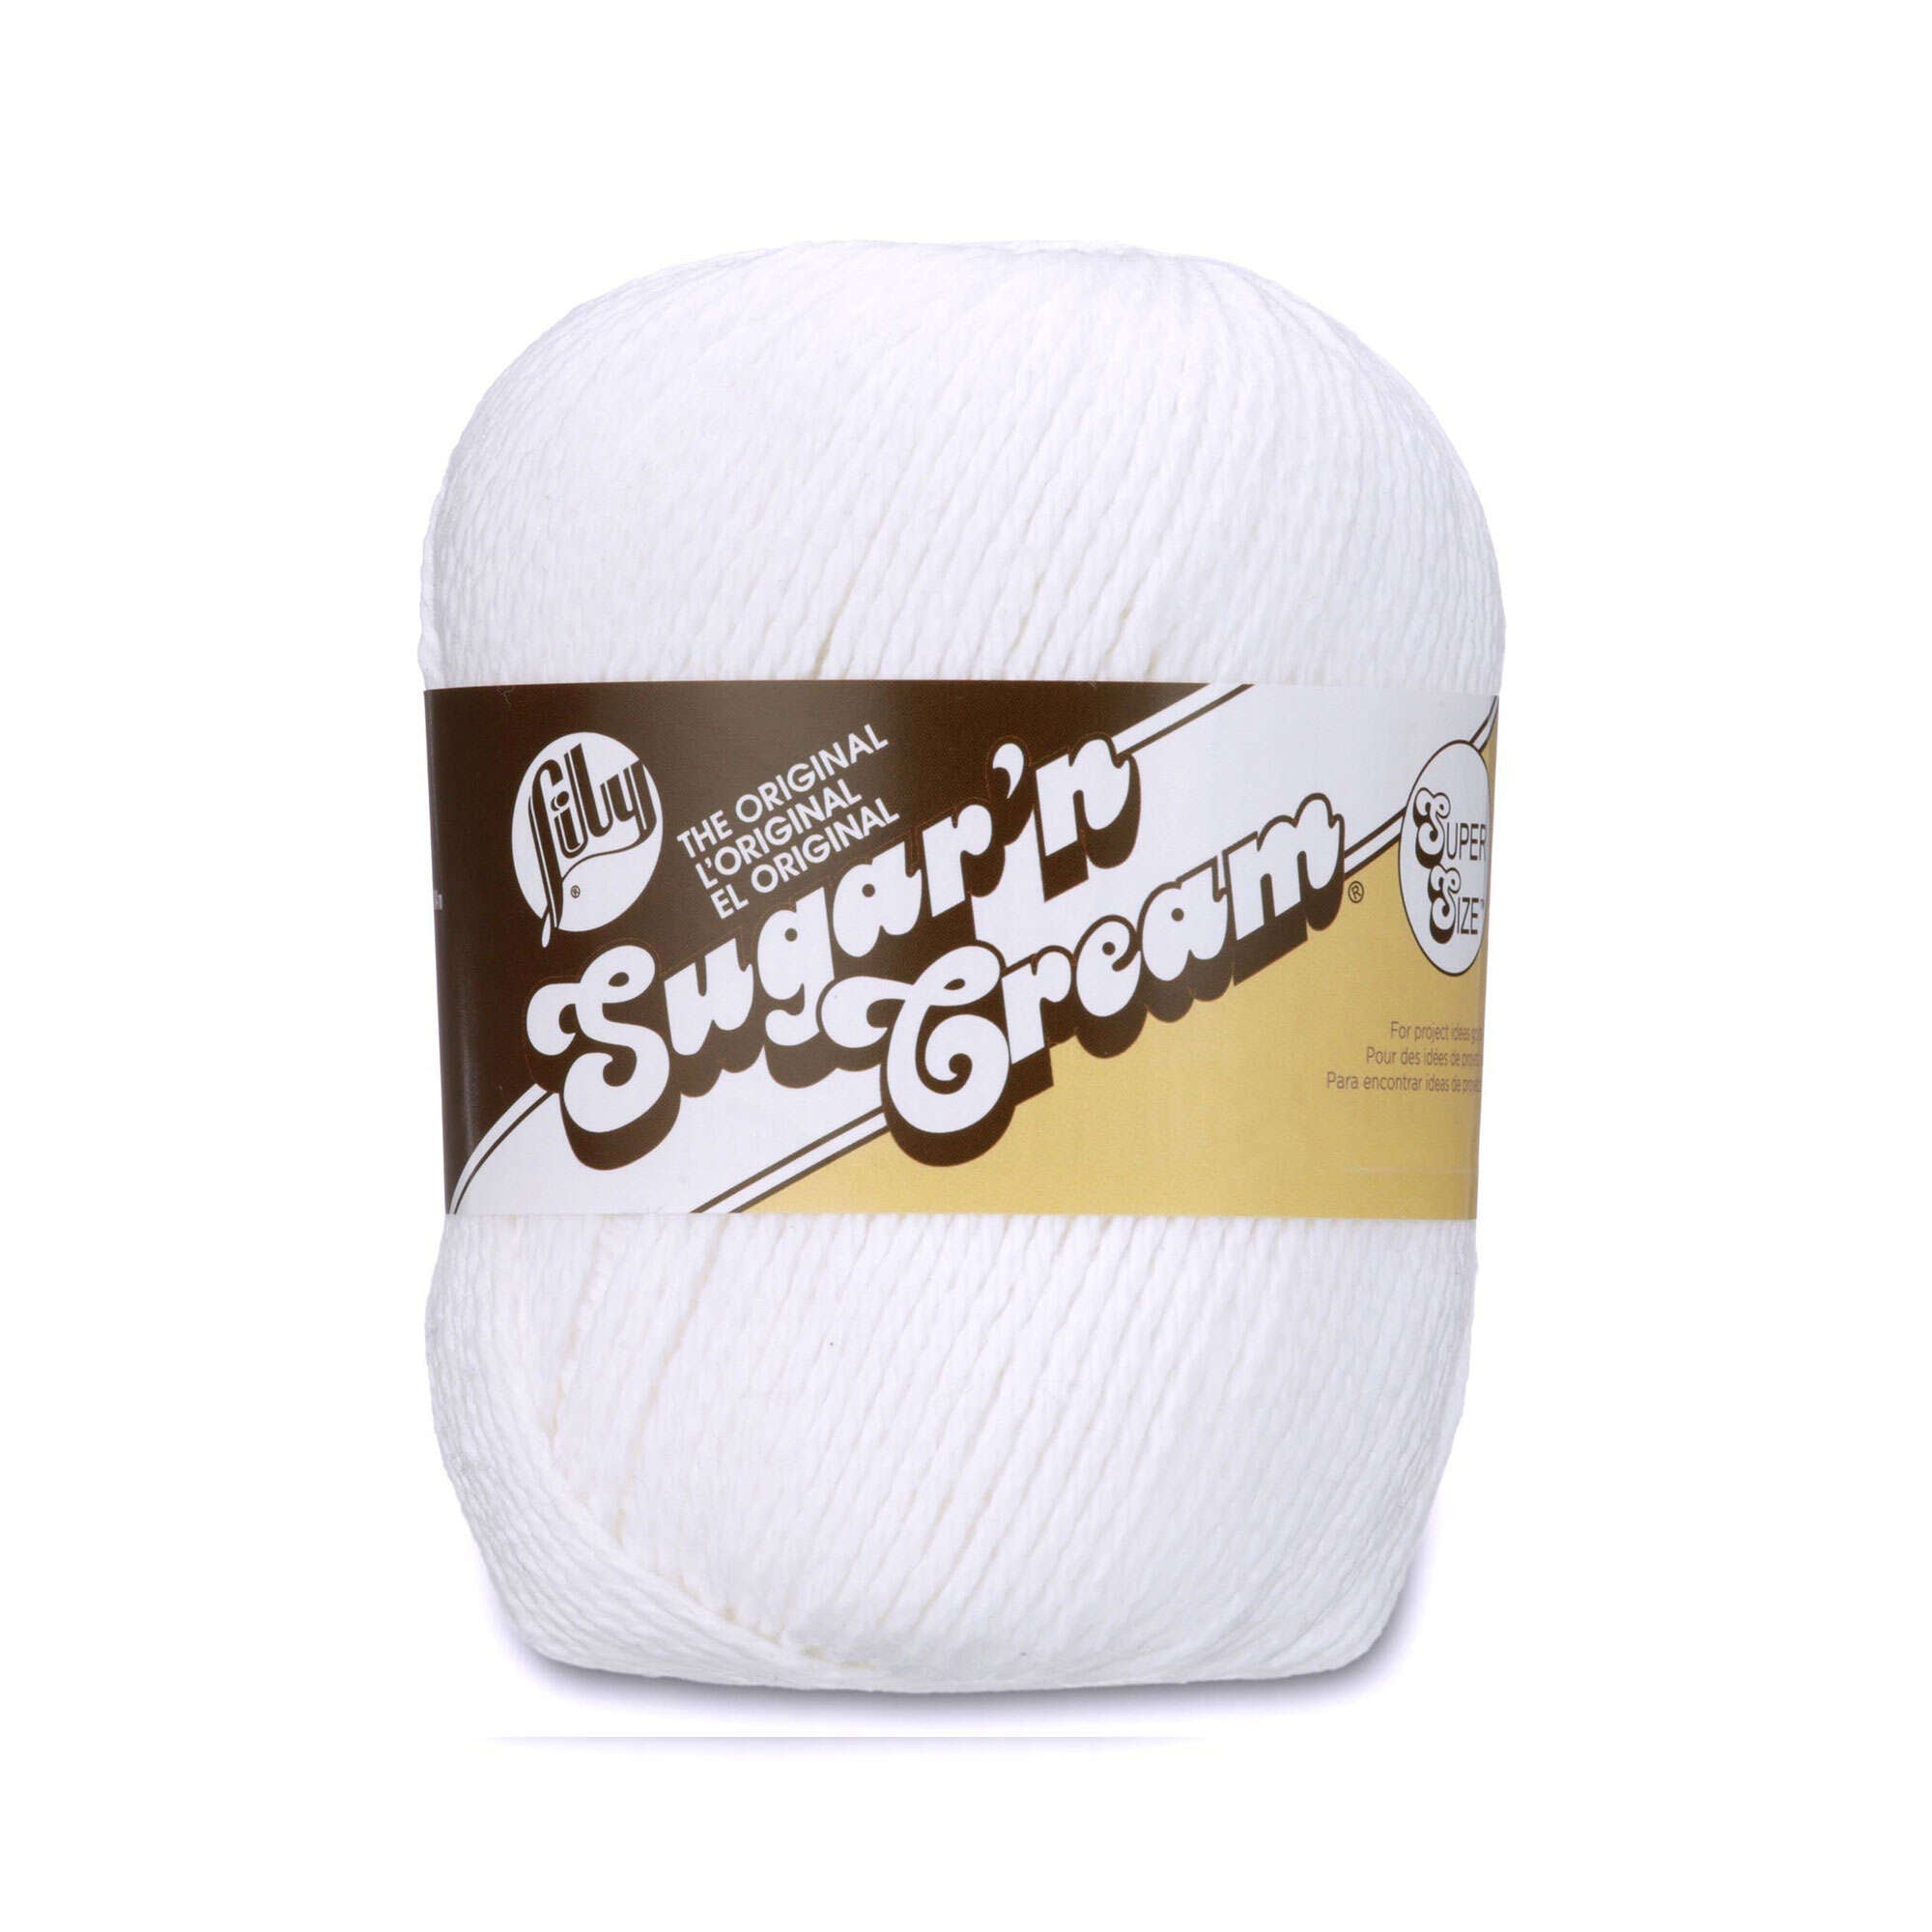 Spinrite Lily Sugar'n Cream Solids Super Size Yarn, Yellow